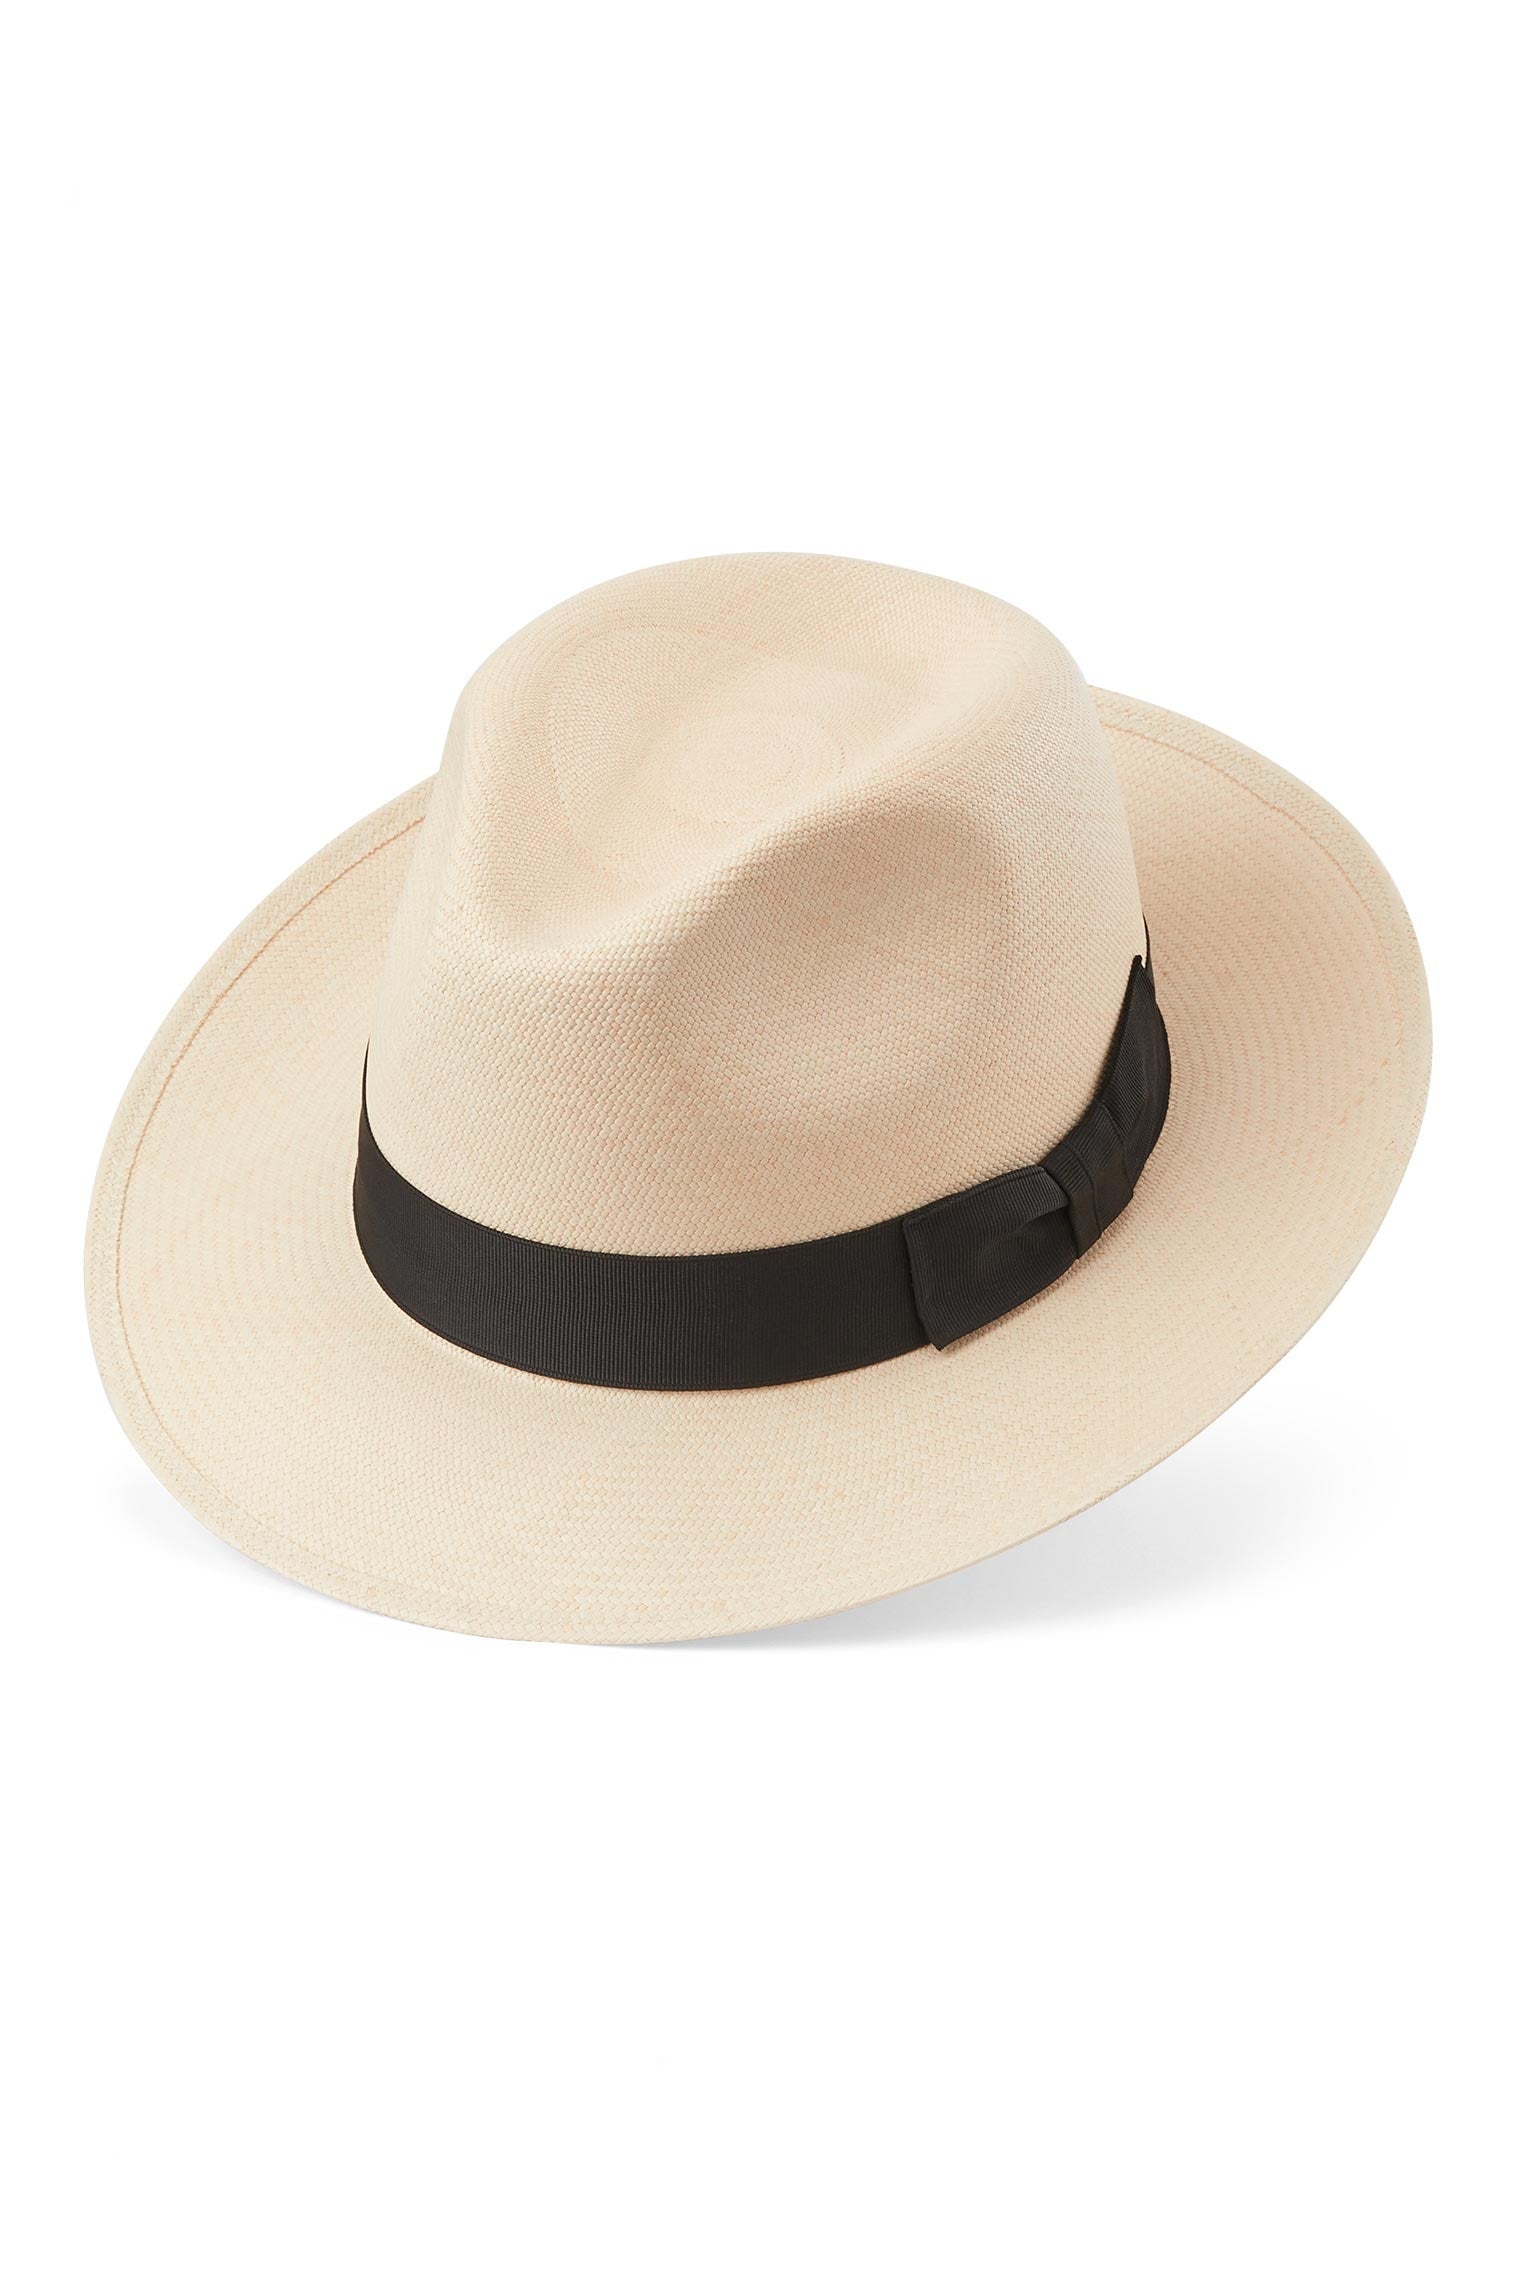 Fairbanks Panama - Panama Hats - Lock & Co. Hatters London UK